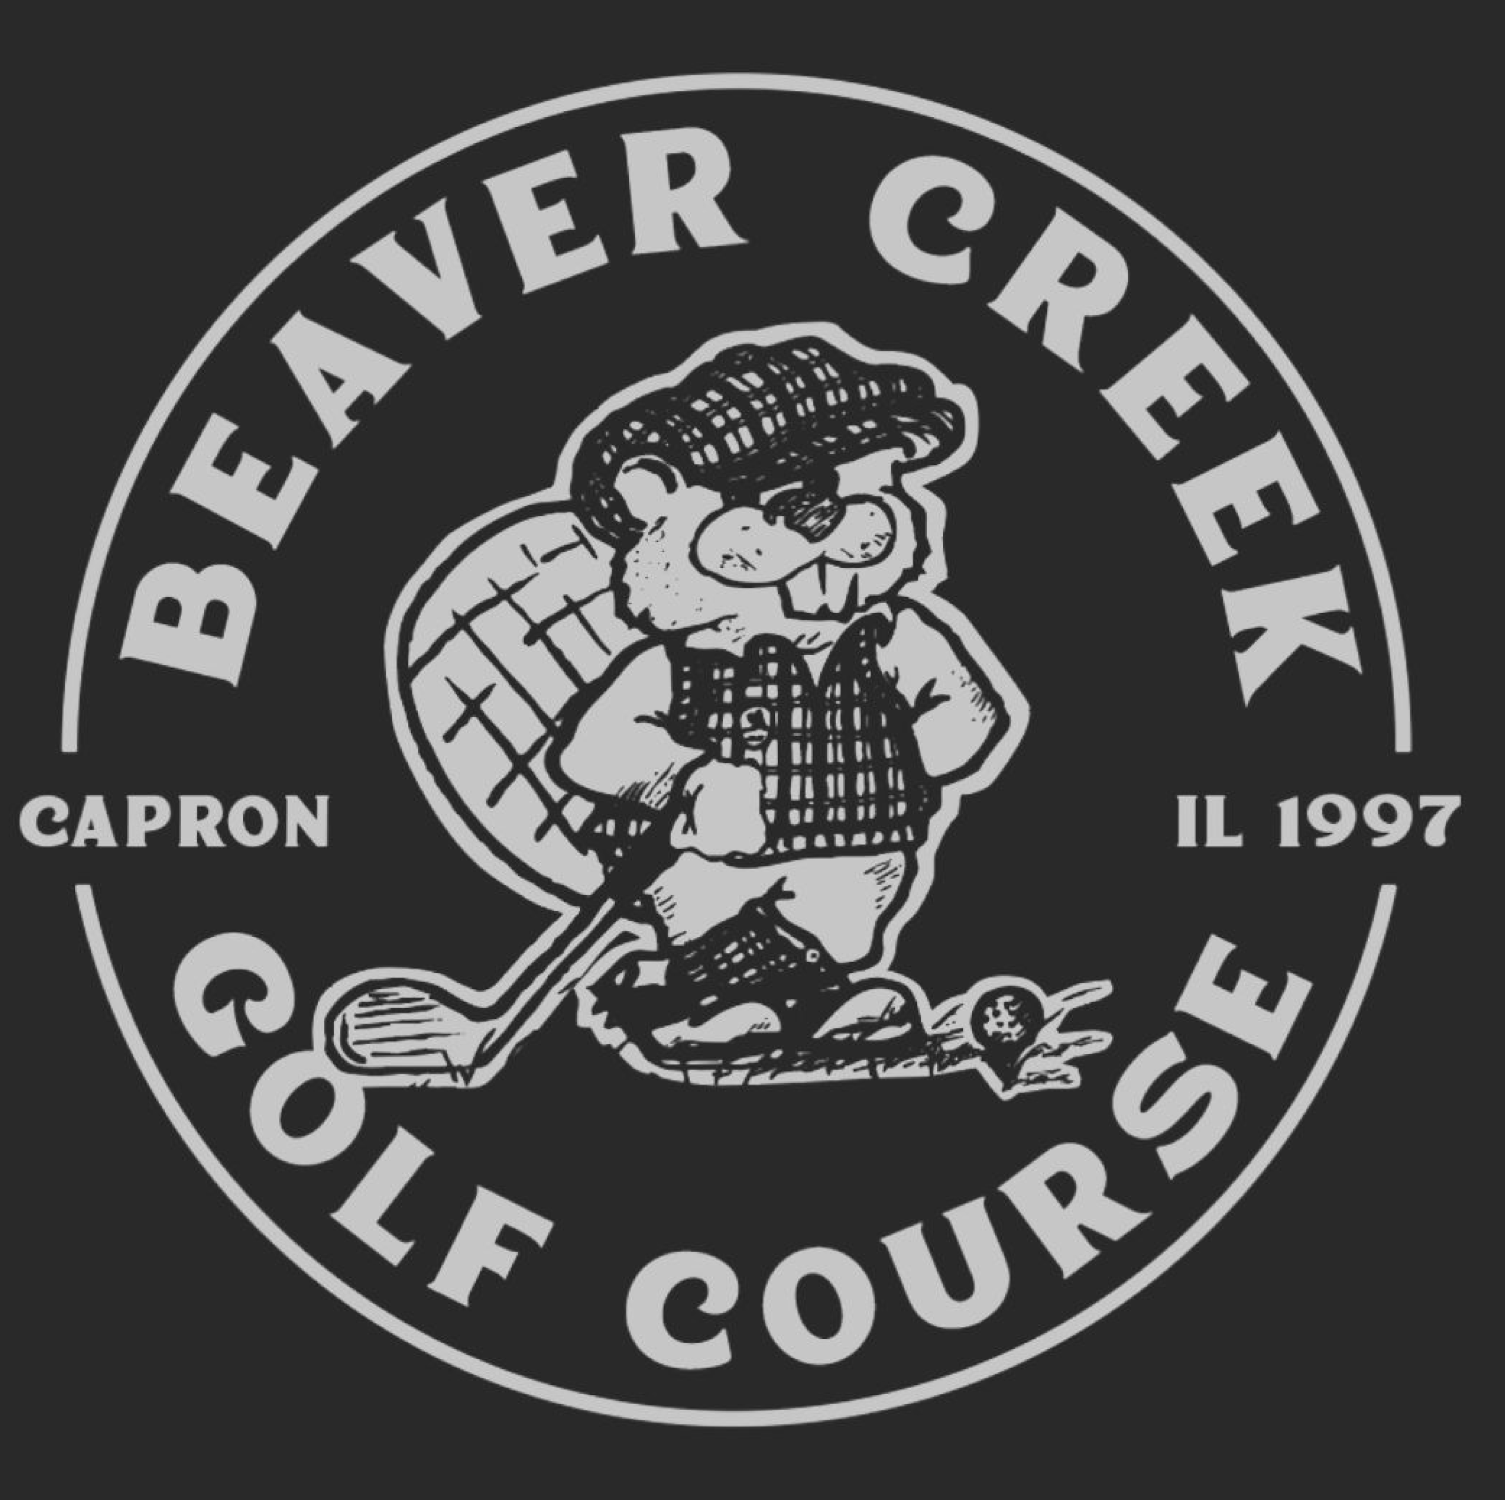 Beaver Creek Golf Course